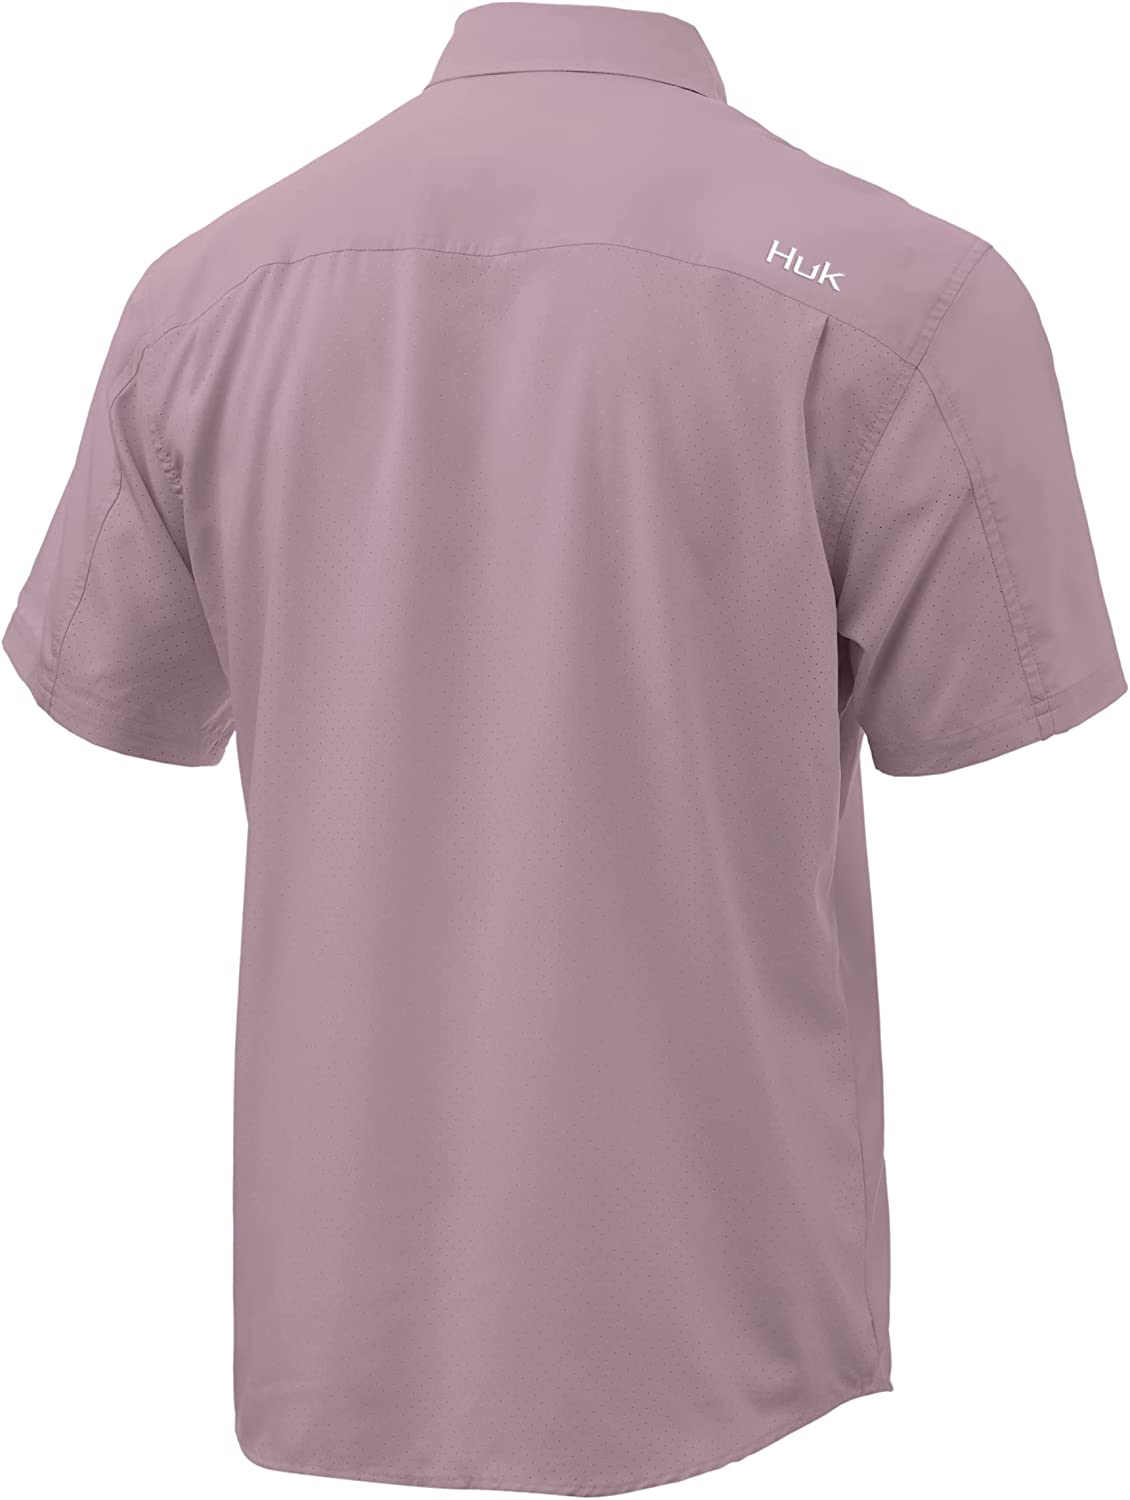 Huk Short Sleeve Shirts for Men